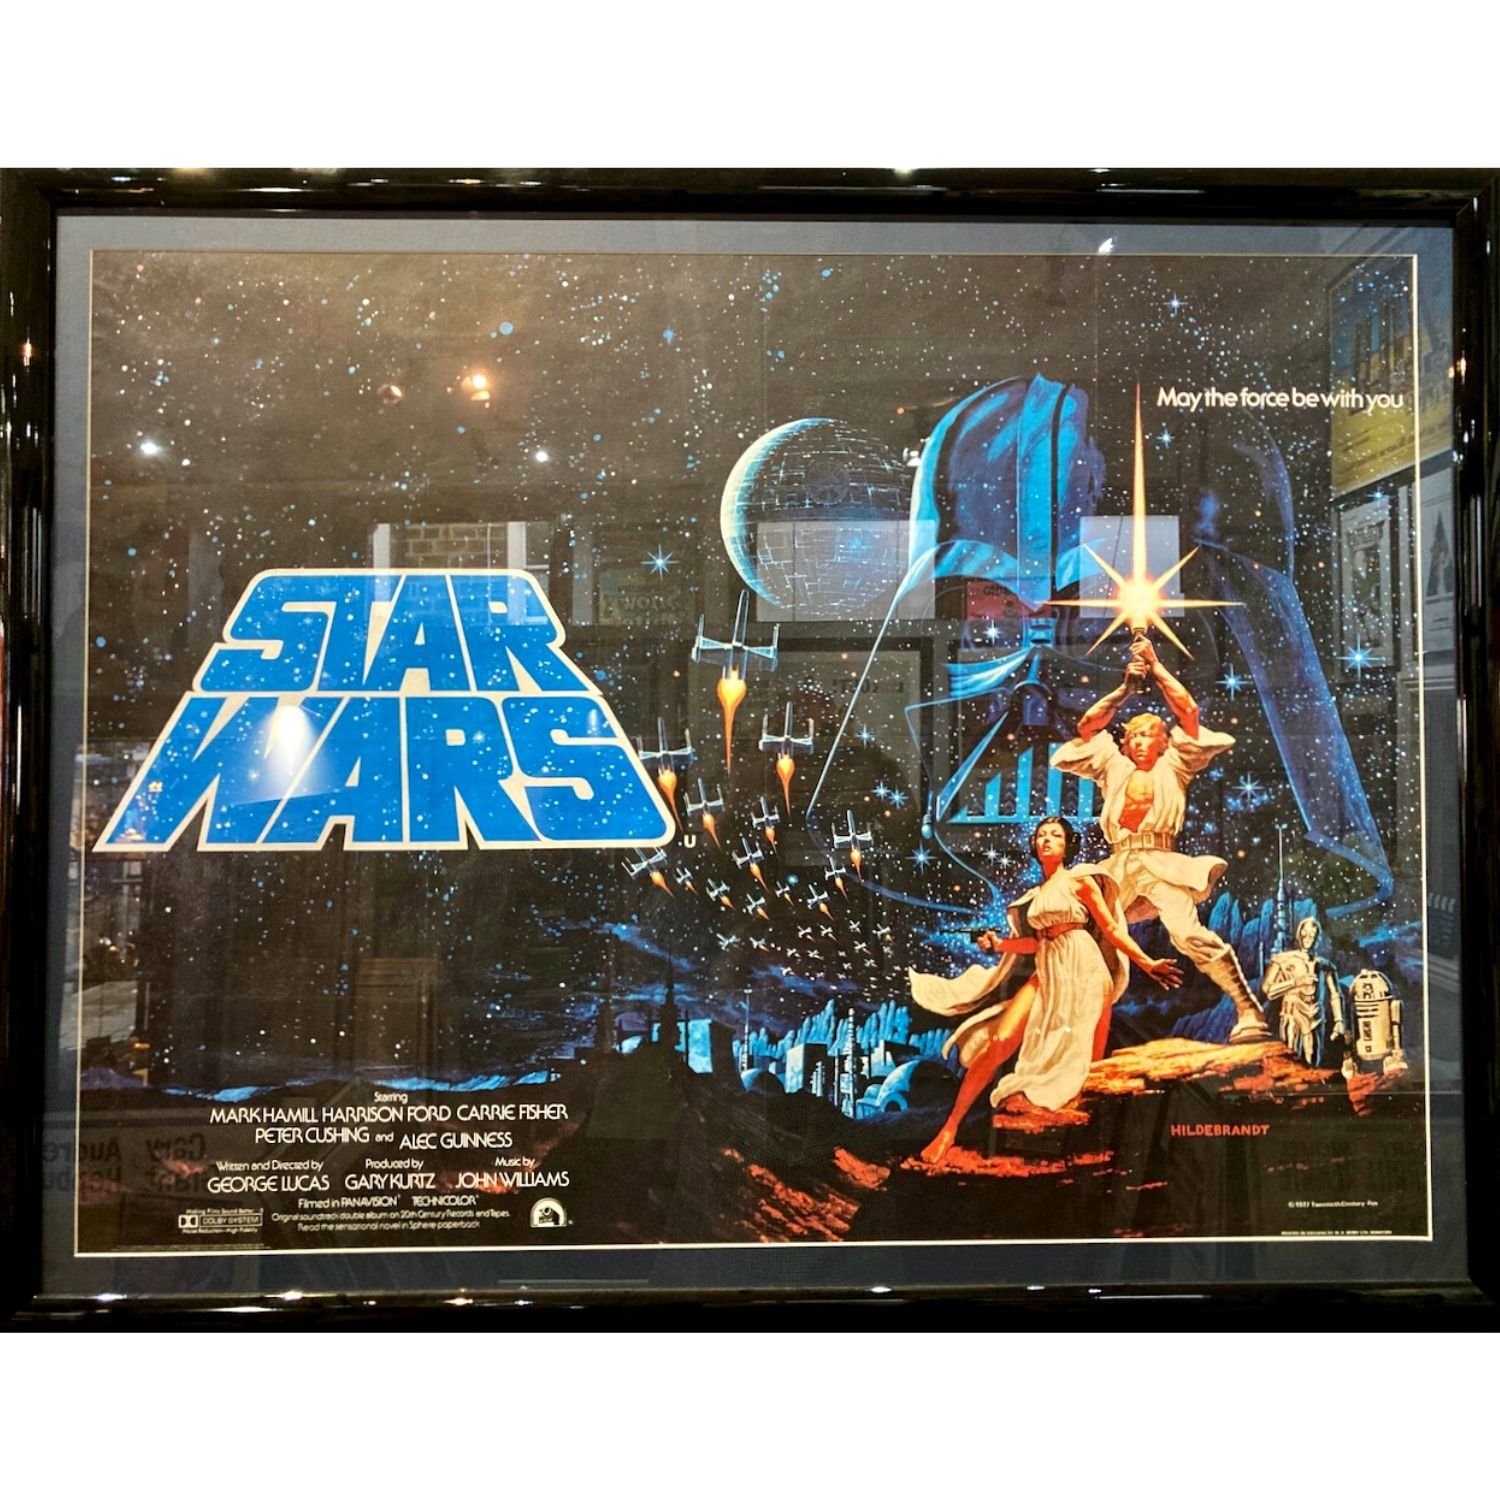 Star Wars very rare vintage movie poster - The Tordoff Gallery UK.jpg